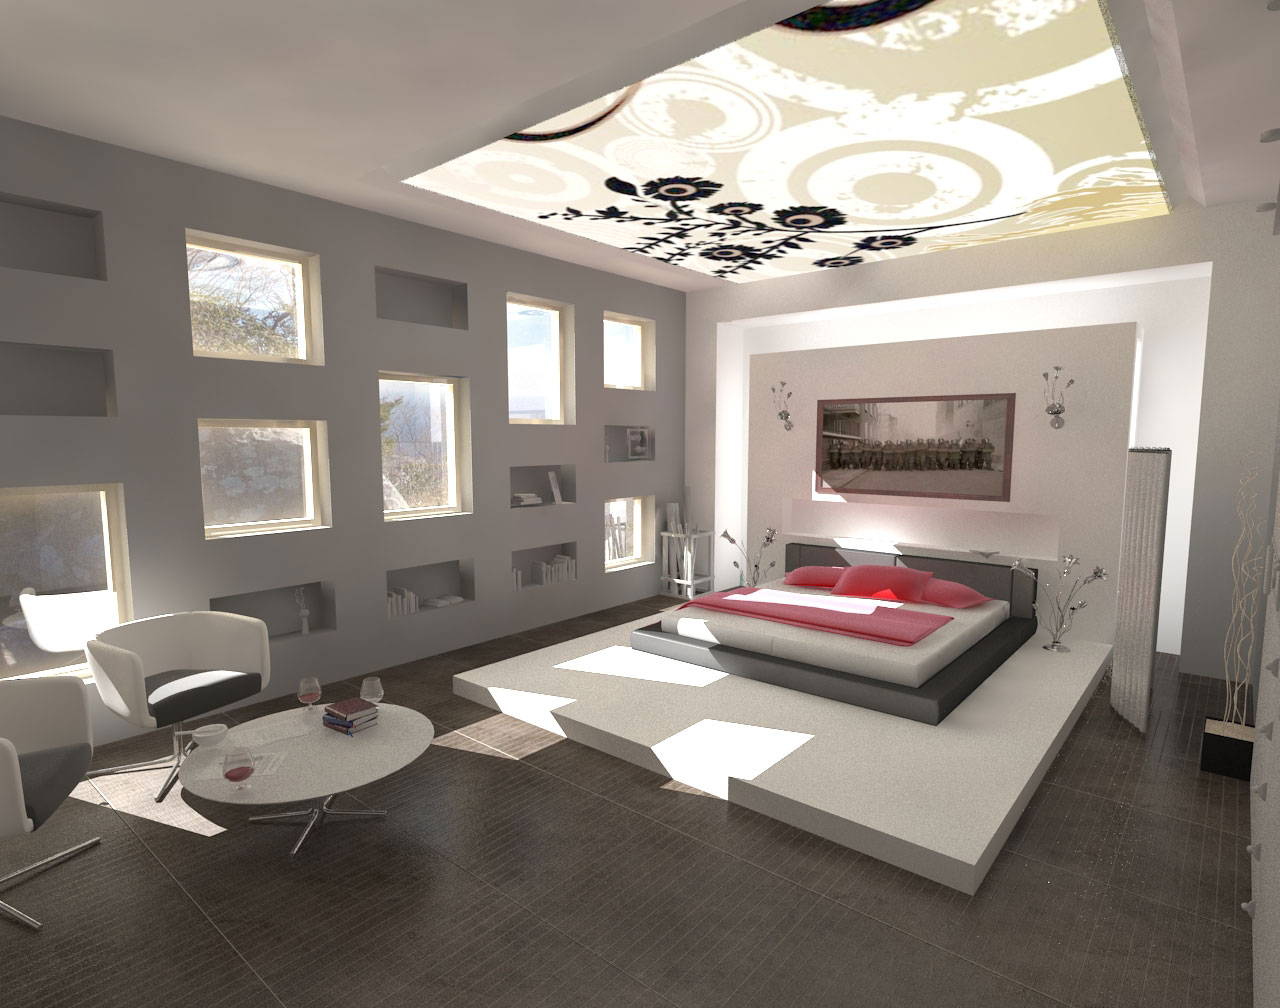 1280x1008px 7 Gorgeous Ideas For Home Interior Design Picture in Interior Design